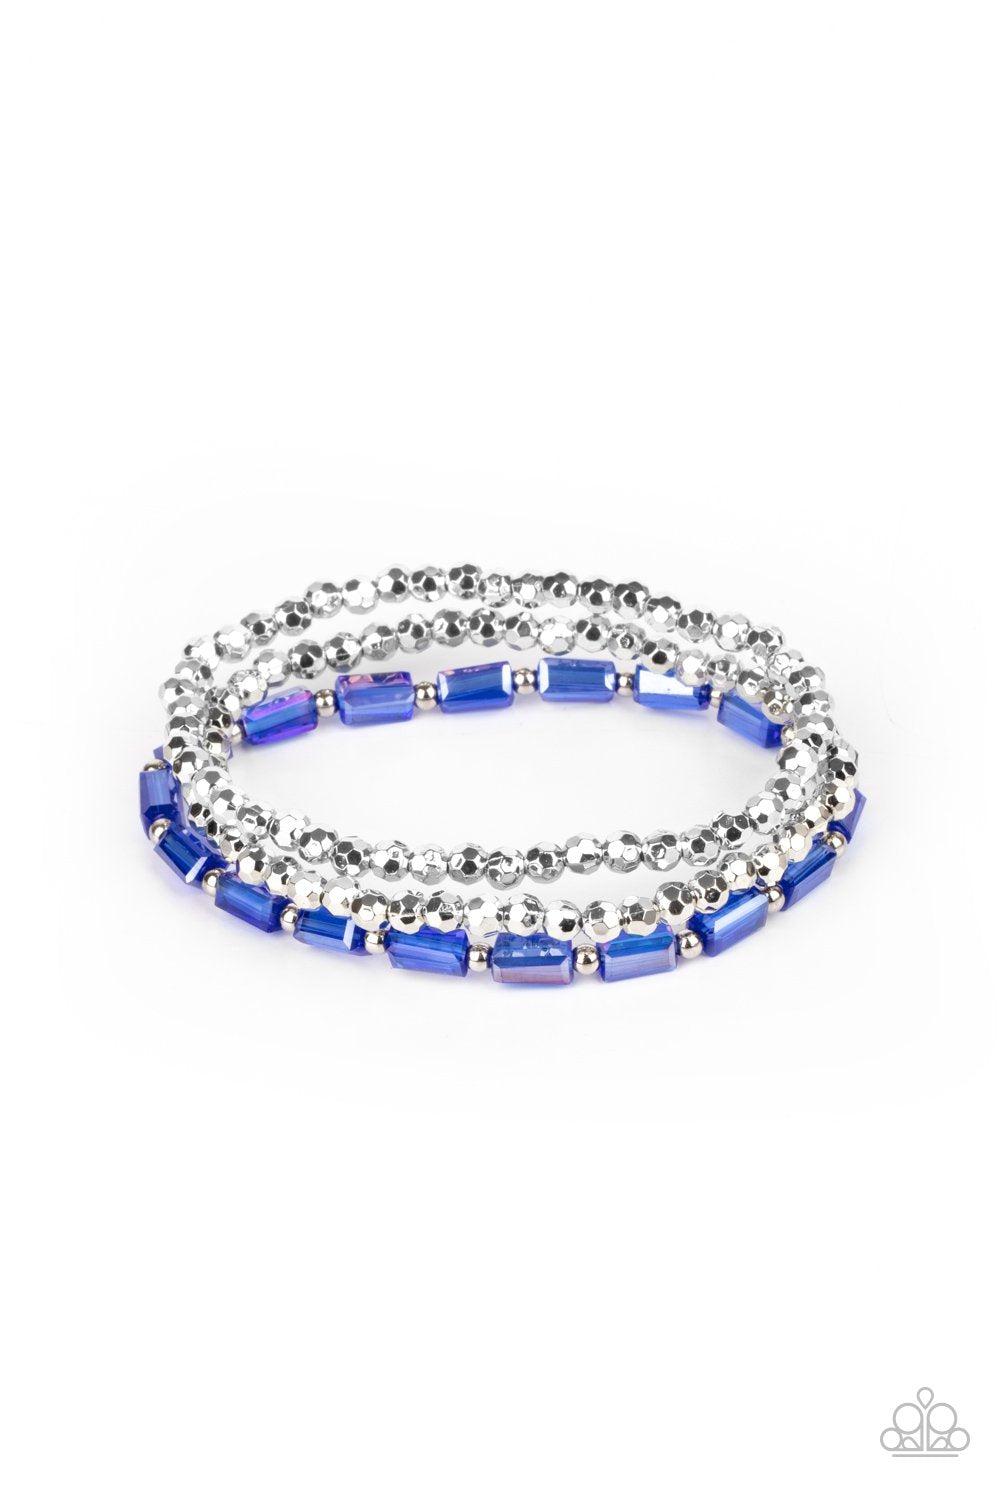 Elegant Essence Iridescent Blue and Silver Bracelet - Paparazzi Accessories- lightbox - CarasShop.com - $5 Jewelry by Cara Jewels